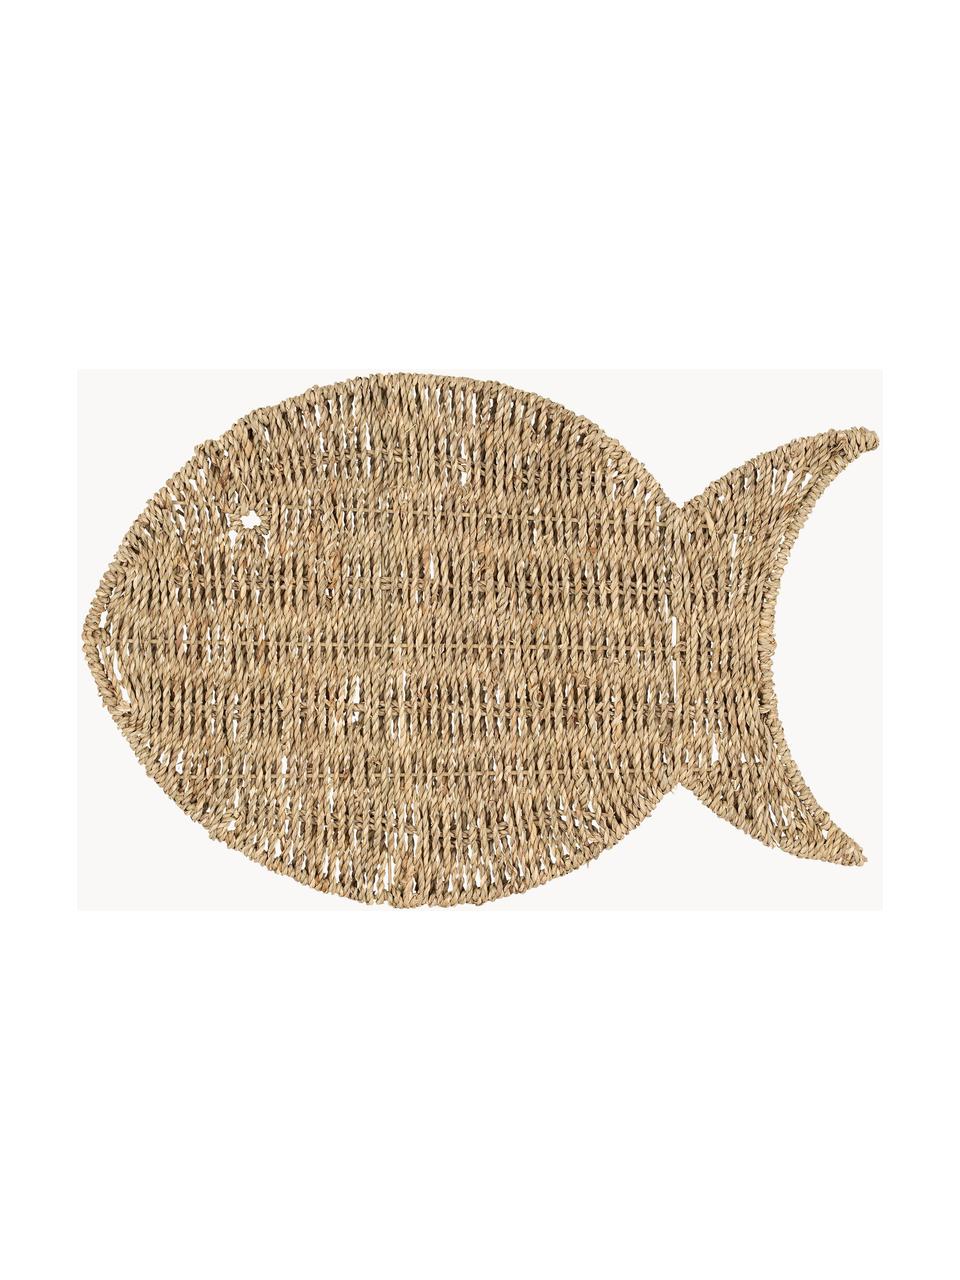 Seegras-Tischset Fish in Fischform, Seegras, Hellbraun, B 30 x L 45 cm